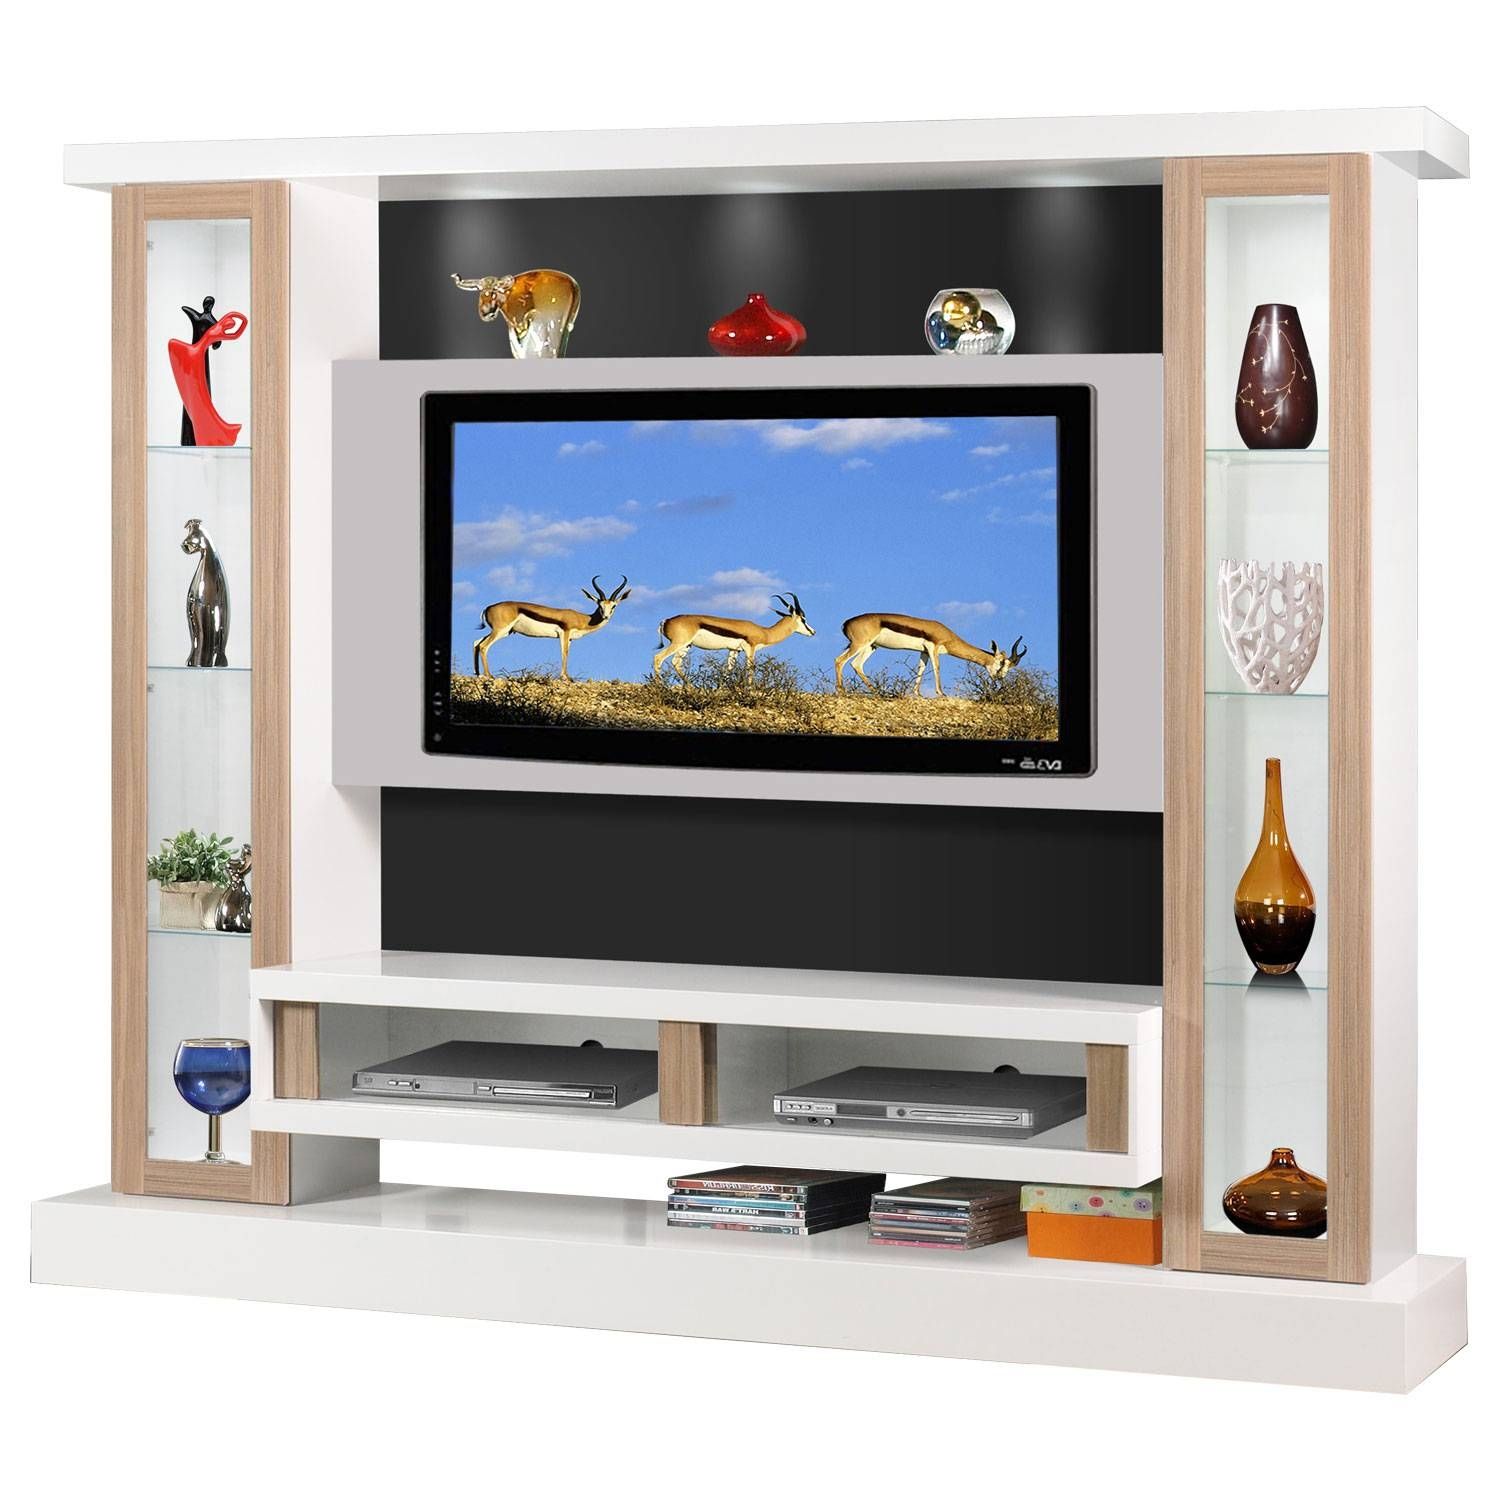 2016041310020096 Inside Fancy Tv Cabinets (View 2 of 15)